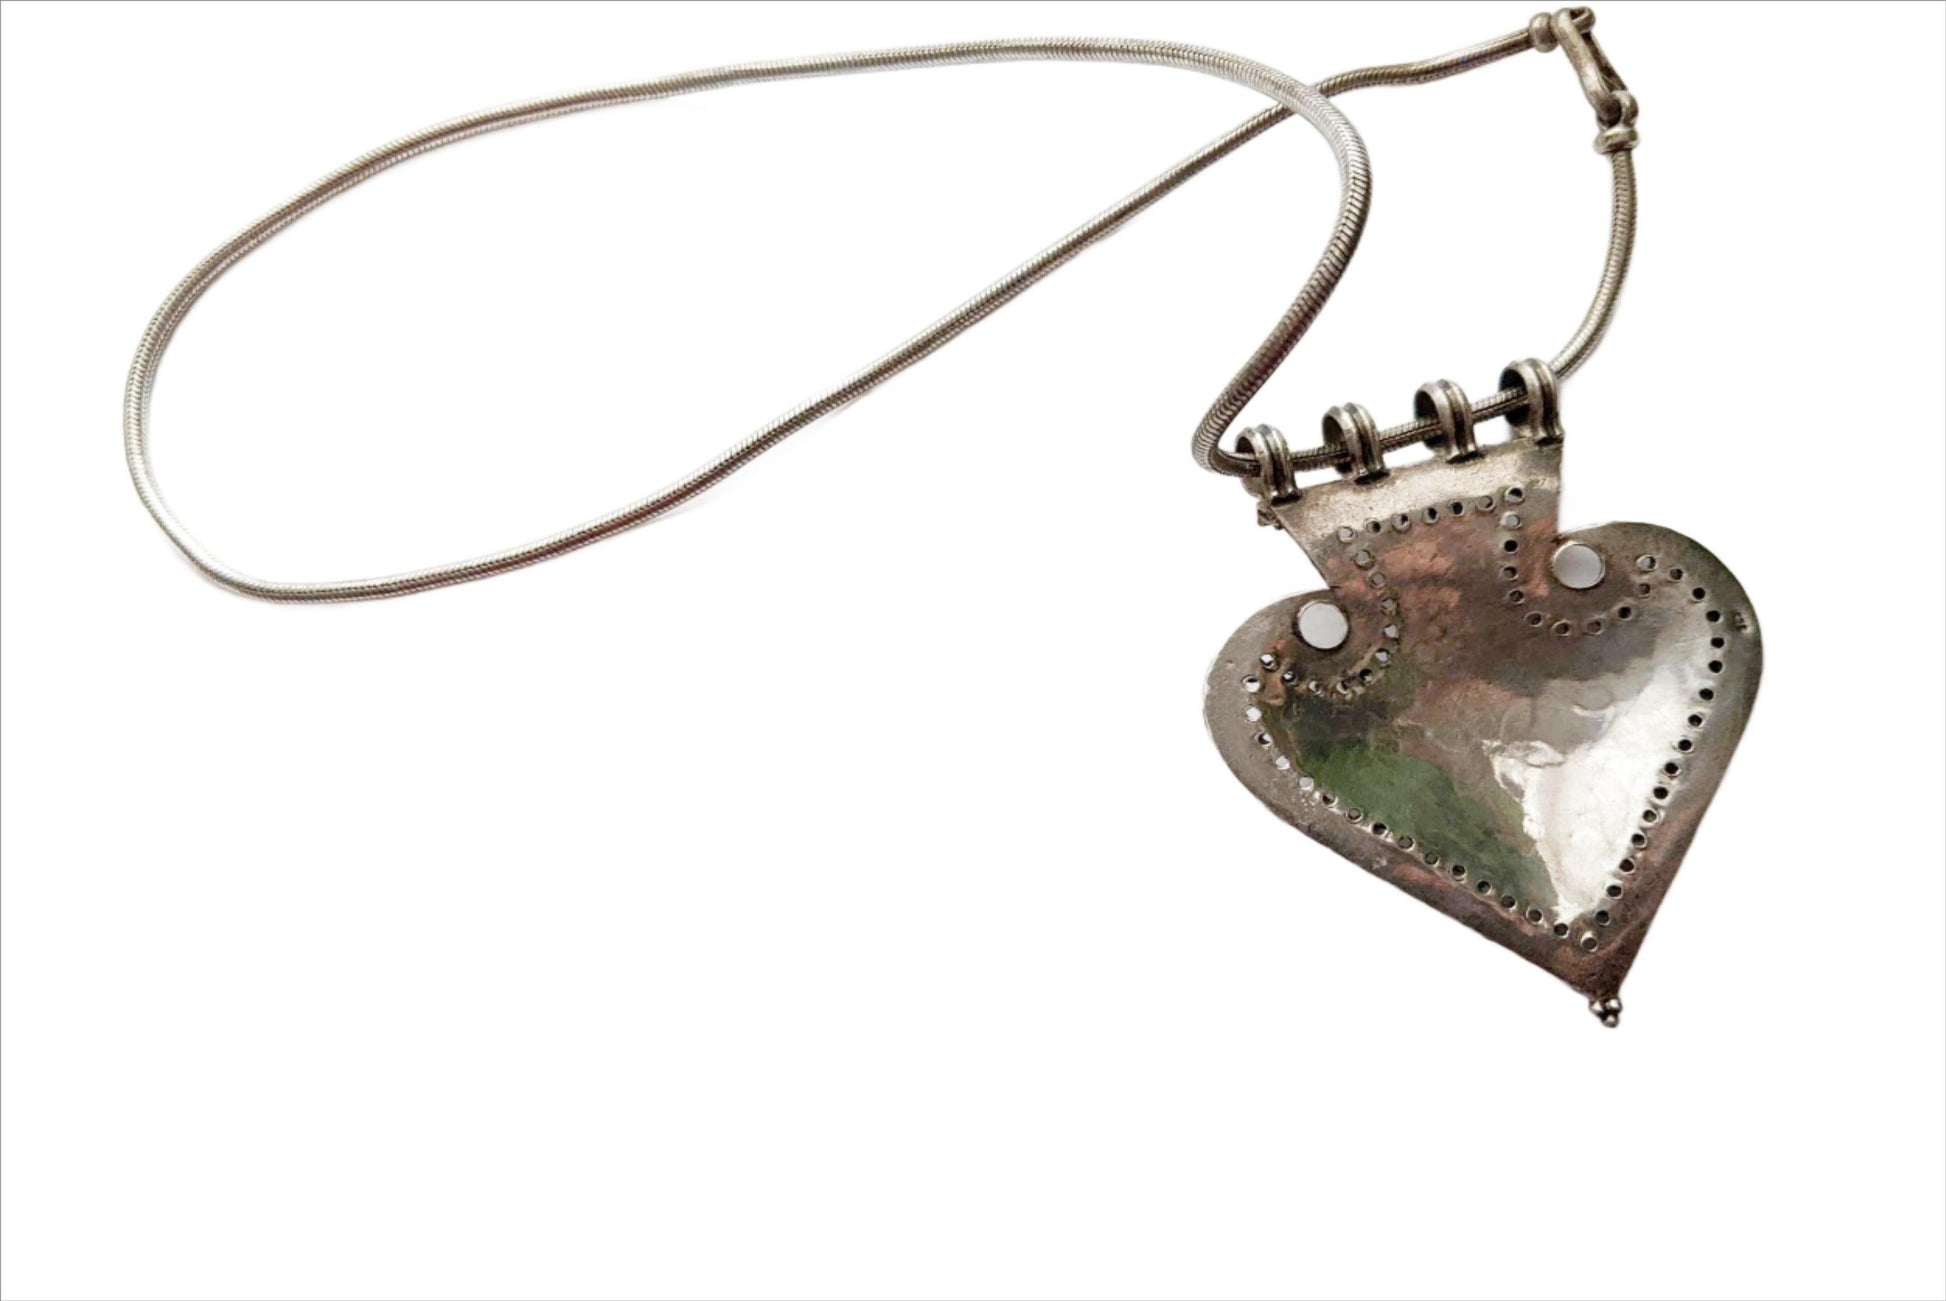 Vintage Silver Tribal Indian Amulet Necklace - Anteeka